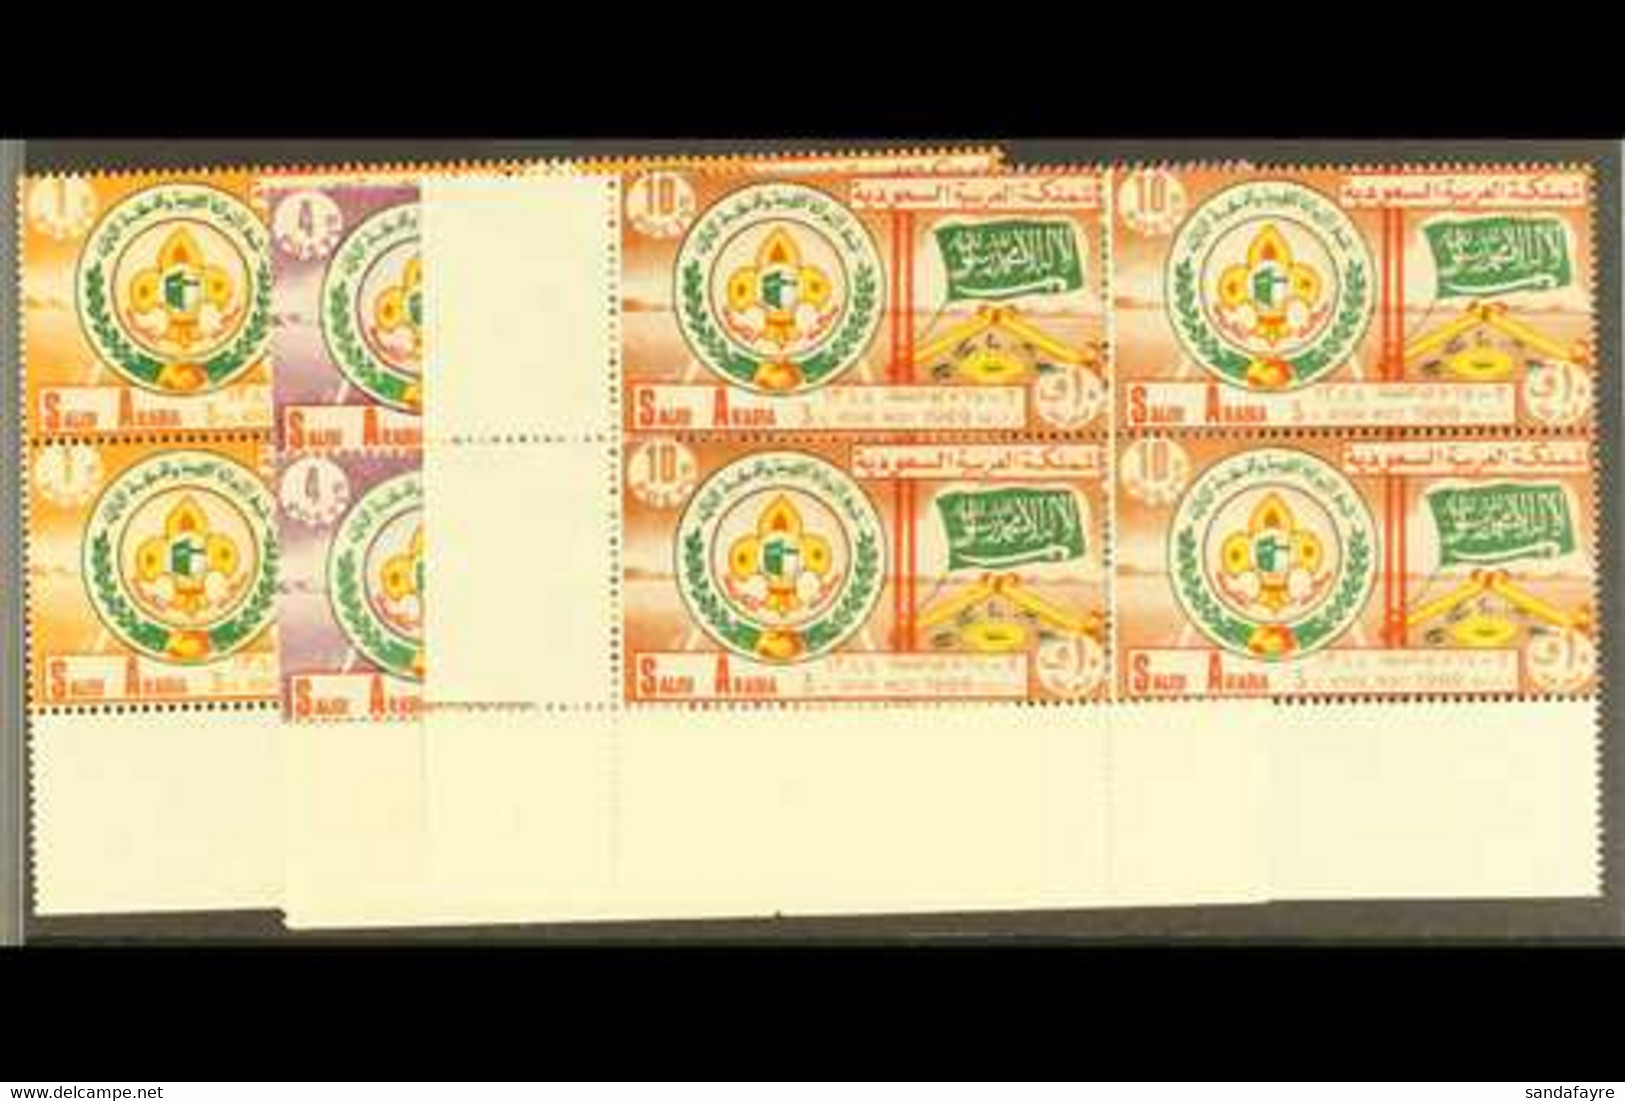 1969 3rd Arab Rover Moot Set Complete, SG 1029/31, In Never Hinged Corner Marginal Blocks Of 4. (12 Stamps) For More Ima - Saudi Arabia